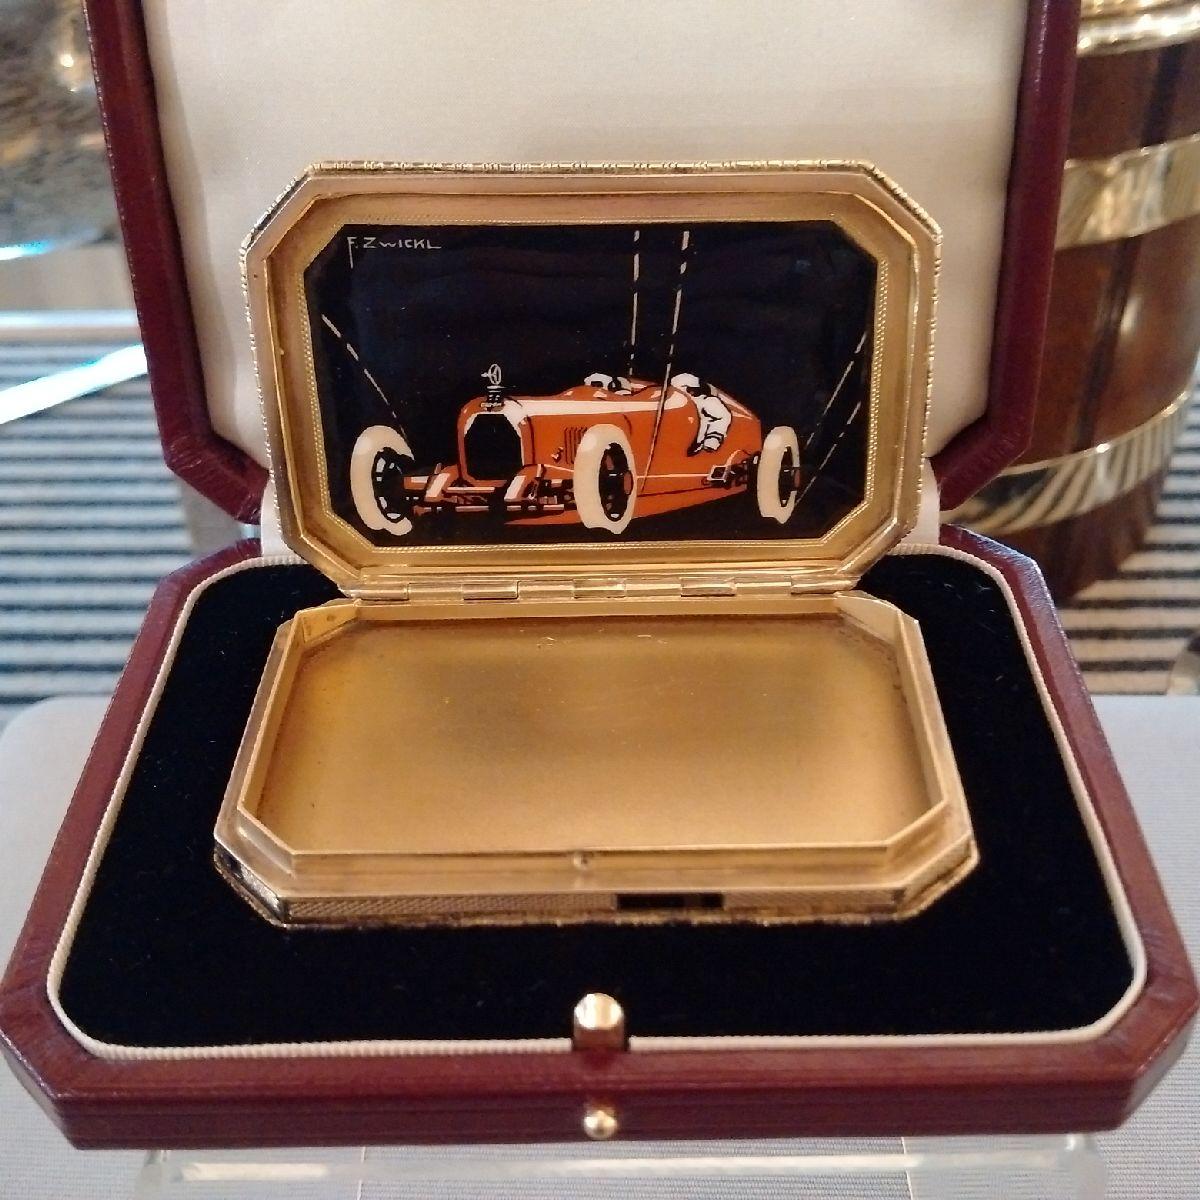 Gilt Art Deco Sterling Silver and Enamel Austro-Daimler Racing Car Pillbox, 1928